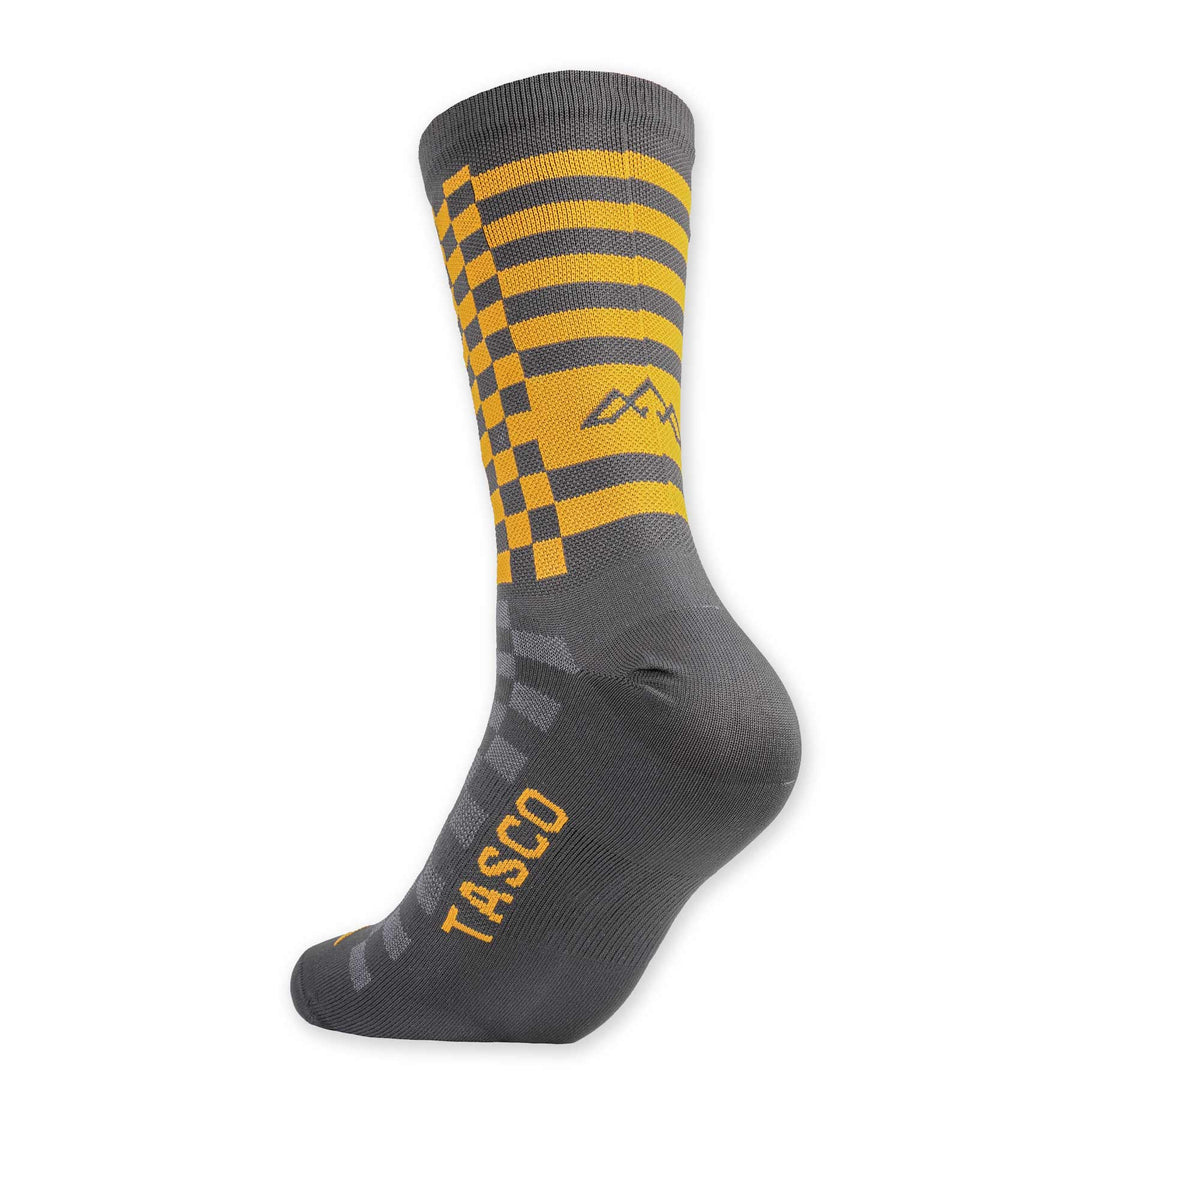 Ridgeline Cycling Socks -  Checkmate (Yellow)